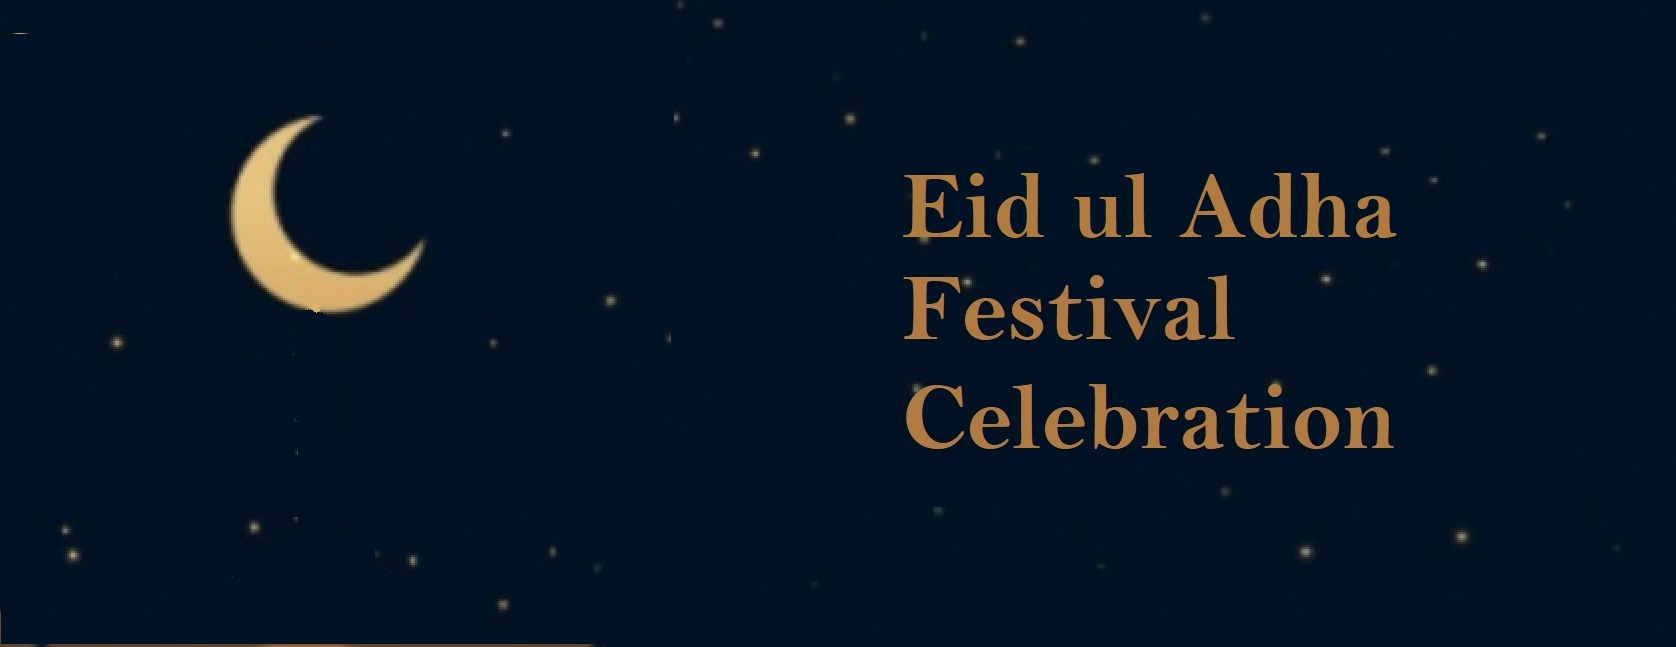 Eid ul Adha Day National Holiday, United Arab Emirates